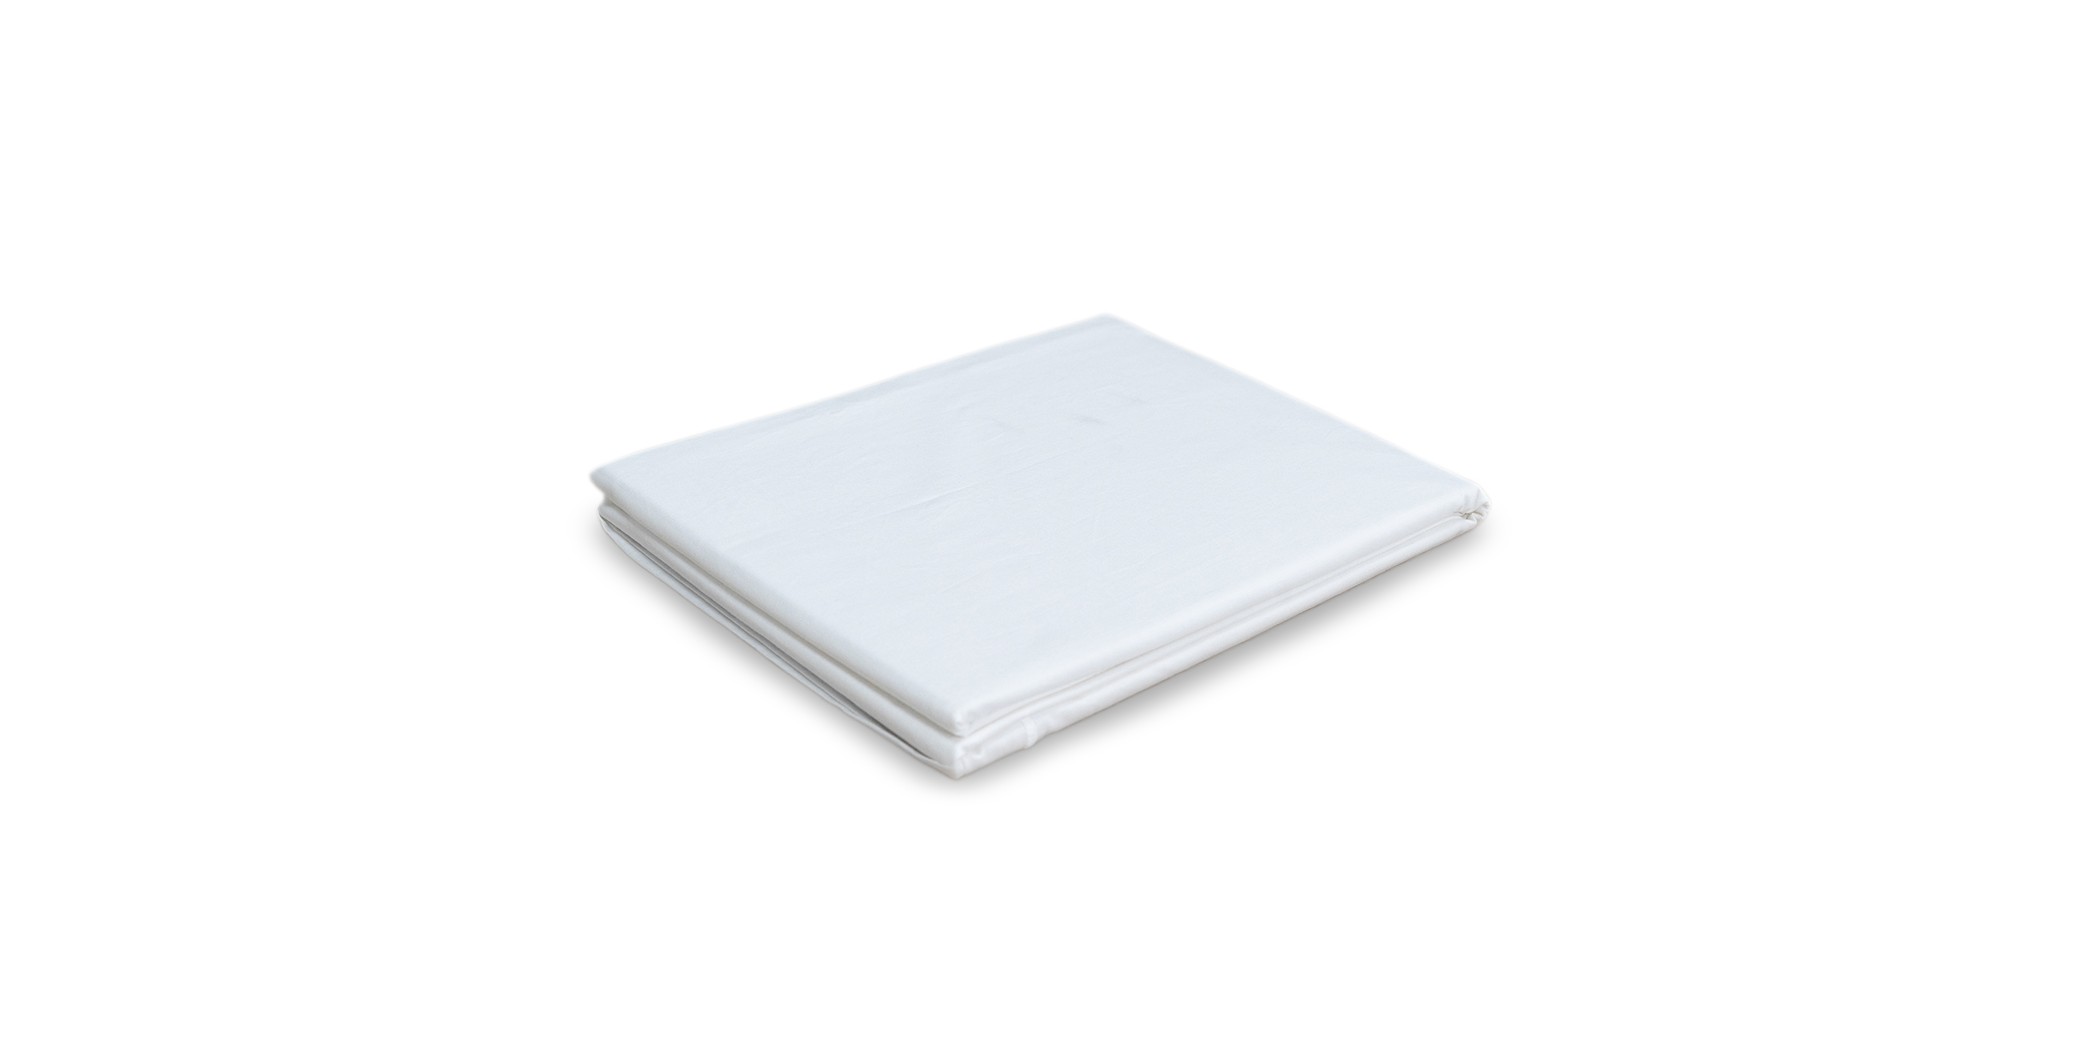 Flat Sheet 160x230+2 cm White Marrowing